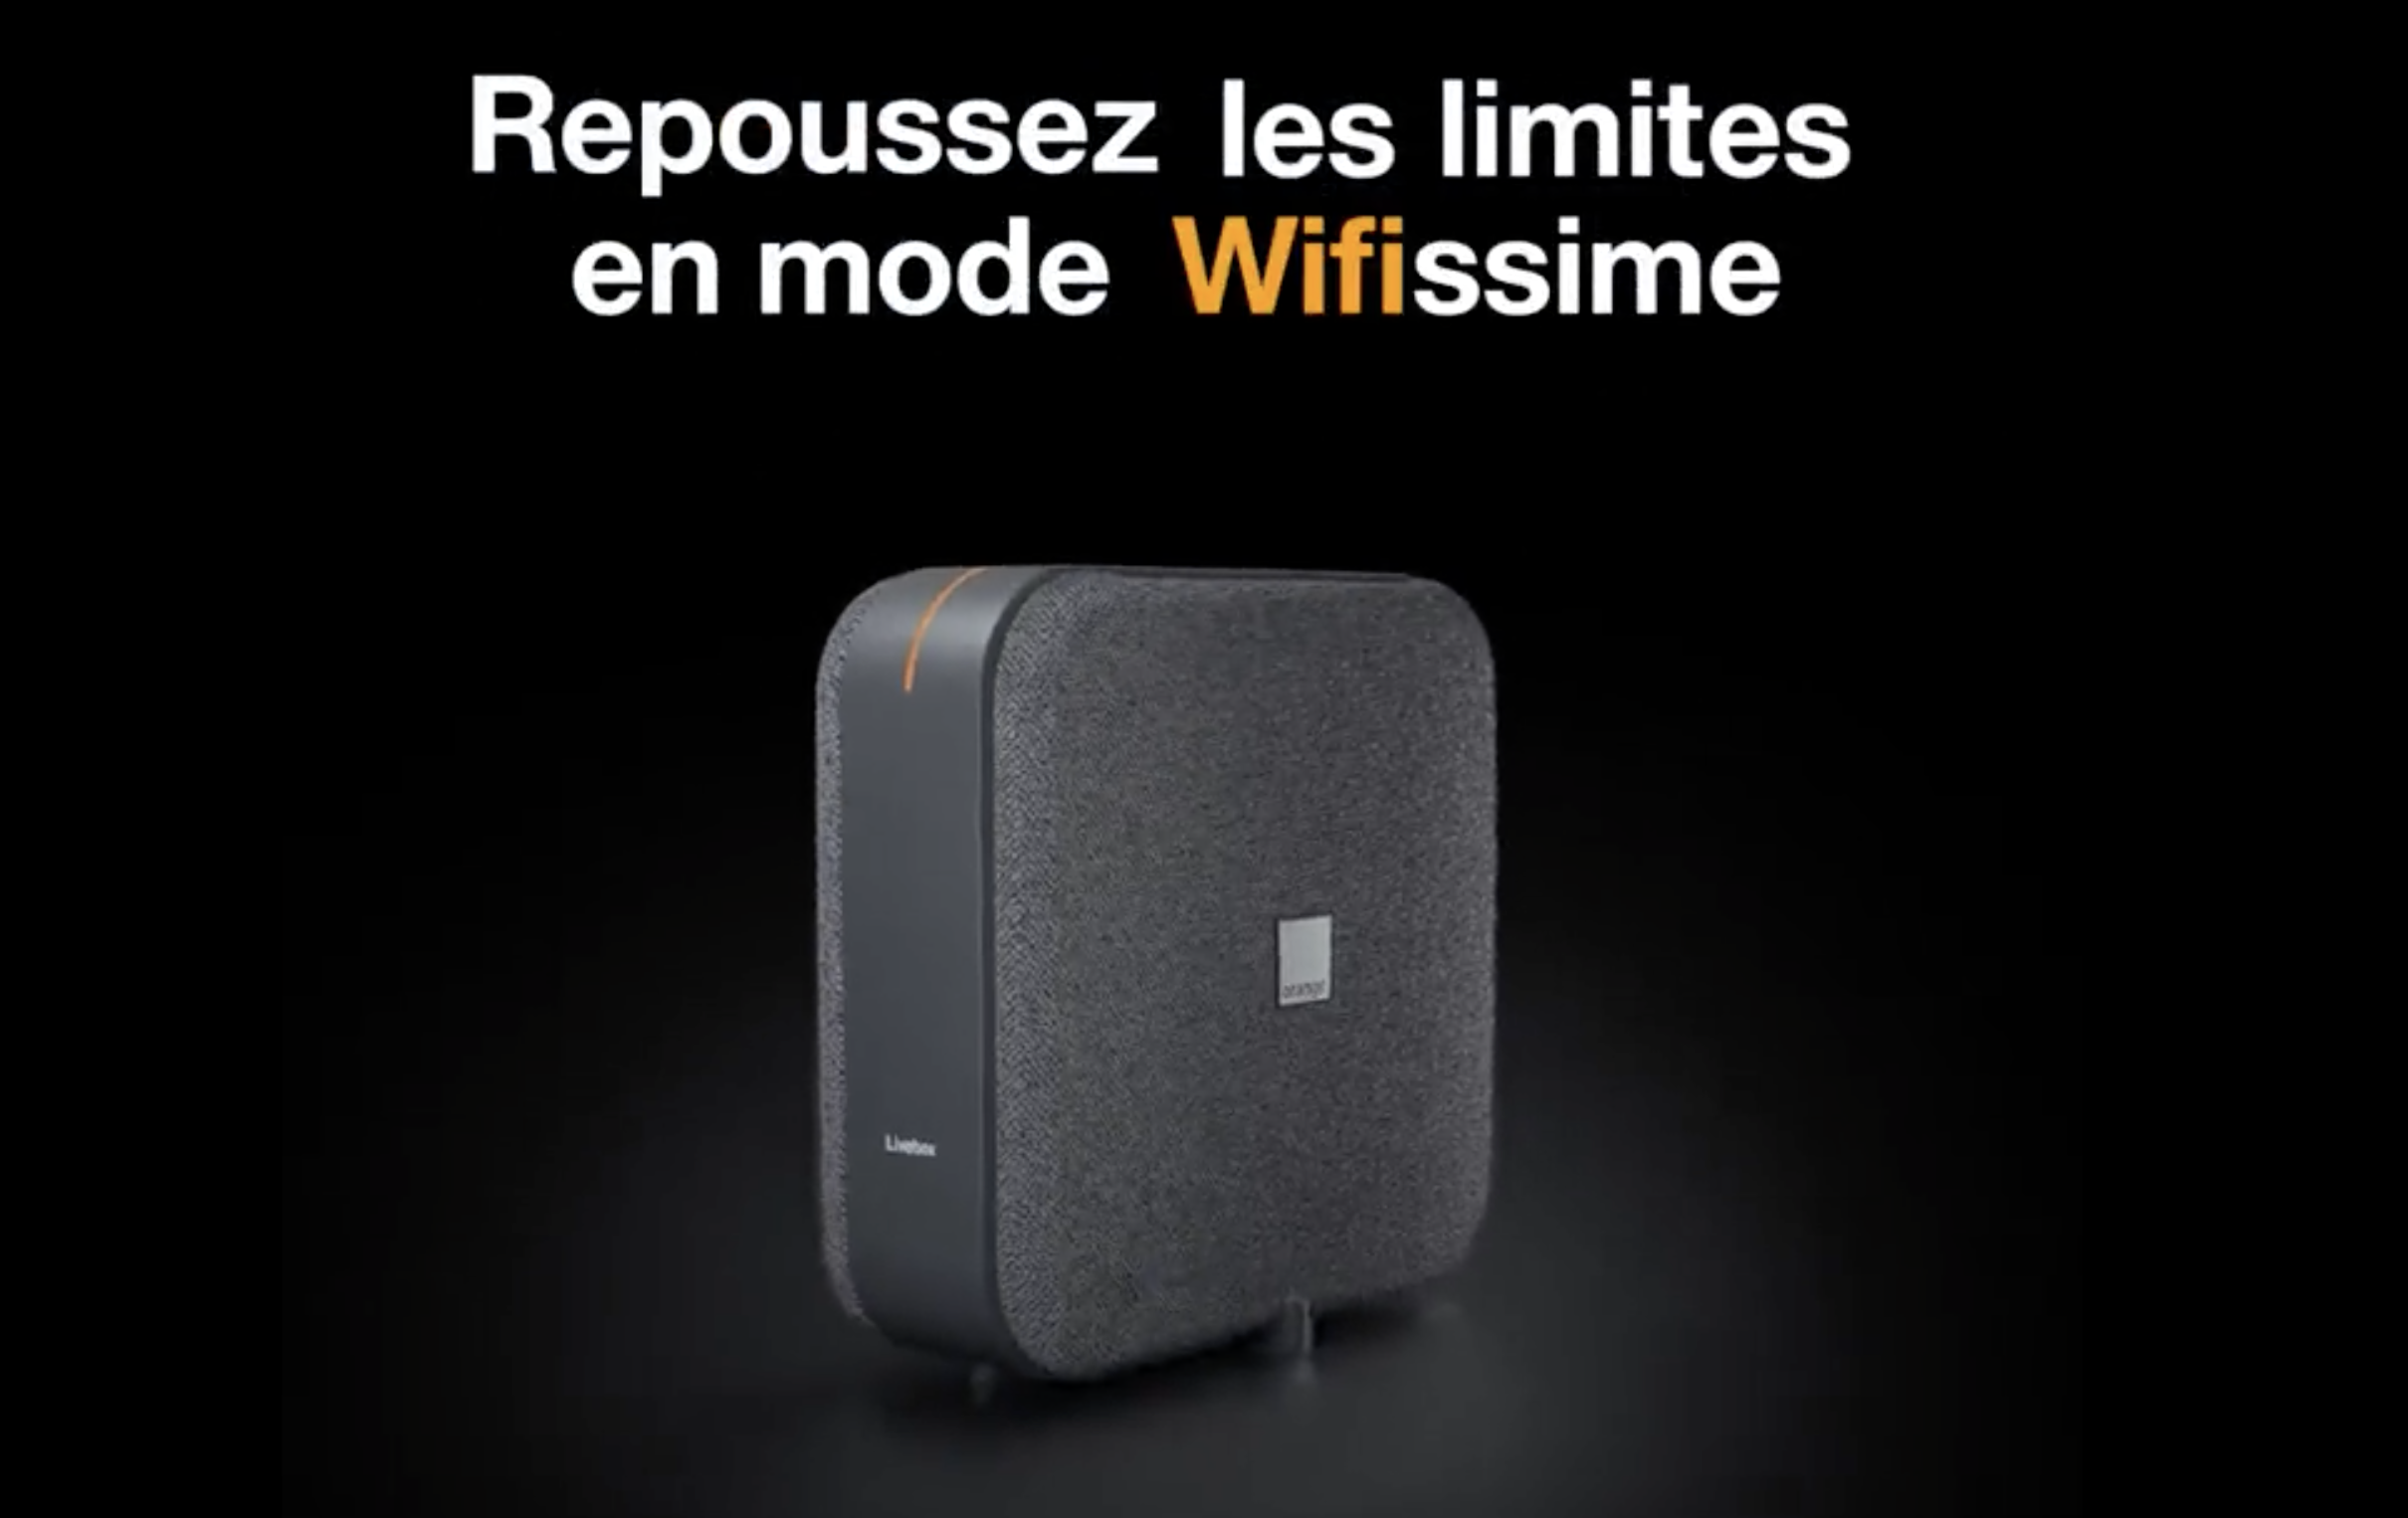 Orange lance sa nouvelle Livebox 6 compatible avec le Wi-Fi 6E